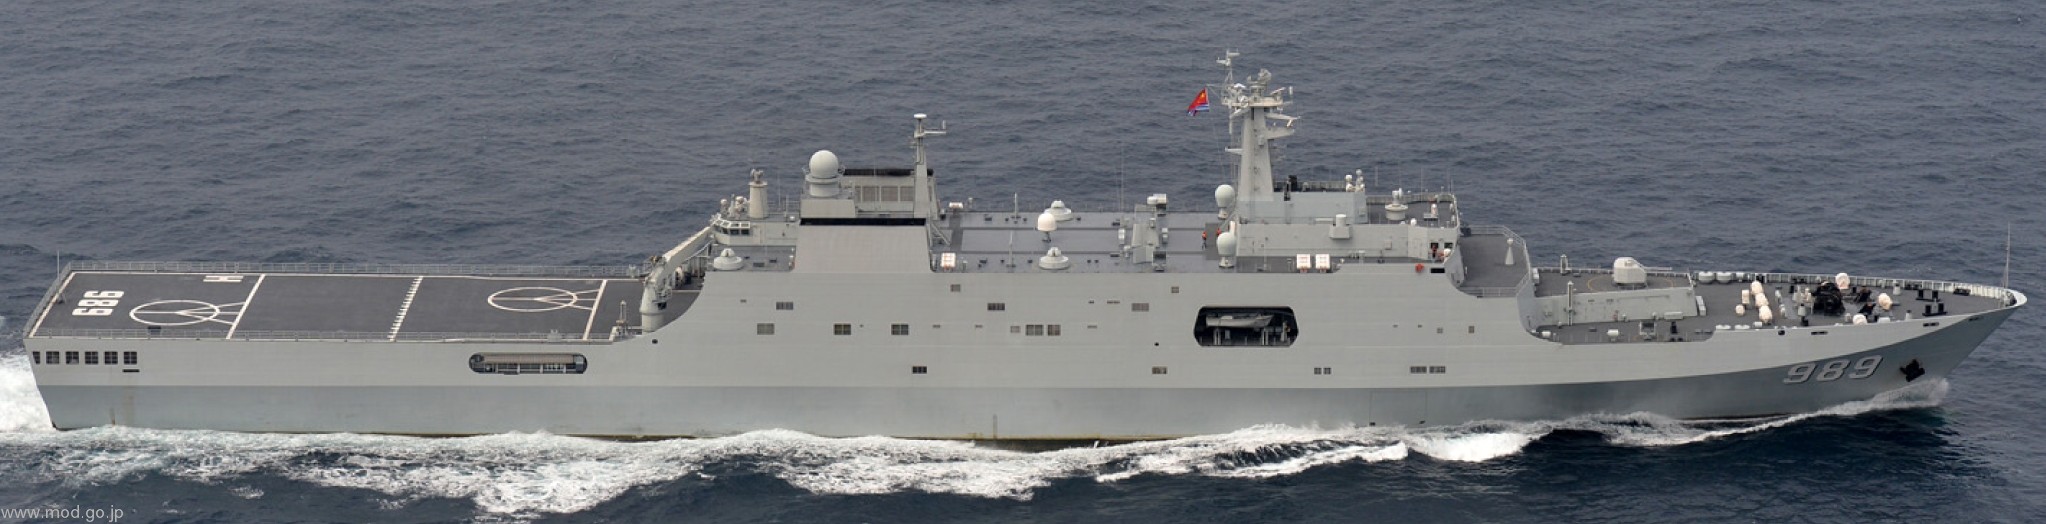 lsd-989 plans changbai shan type 071 yuzhao class landing ship dock lsd amphibious transport china people's liberation army navy 06